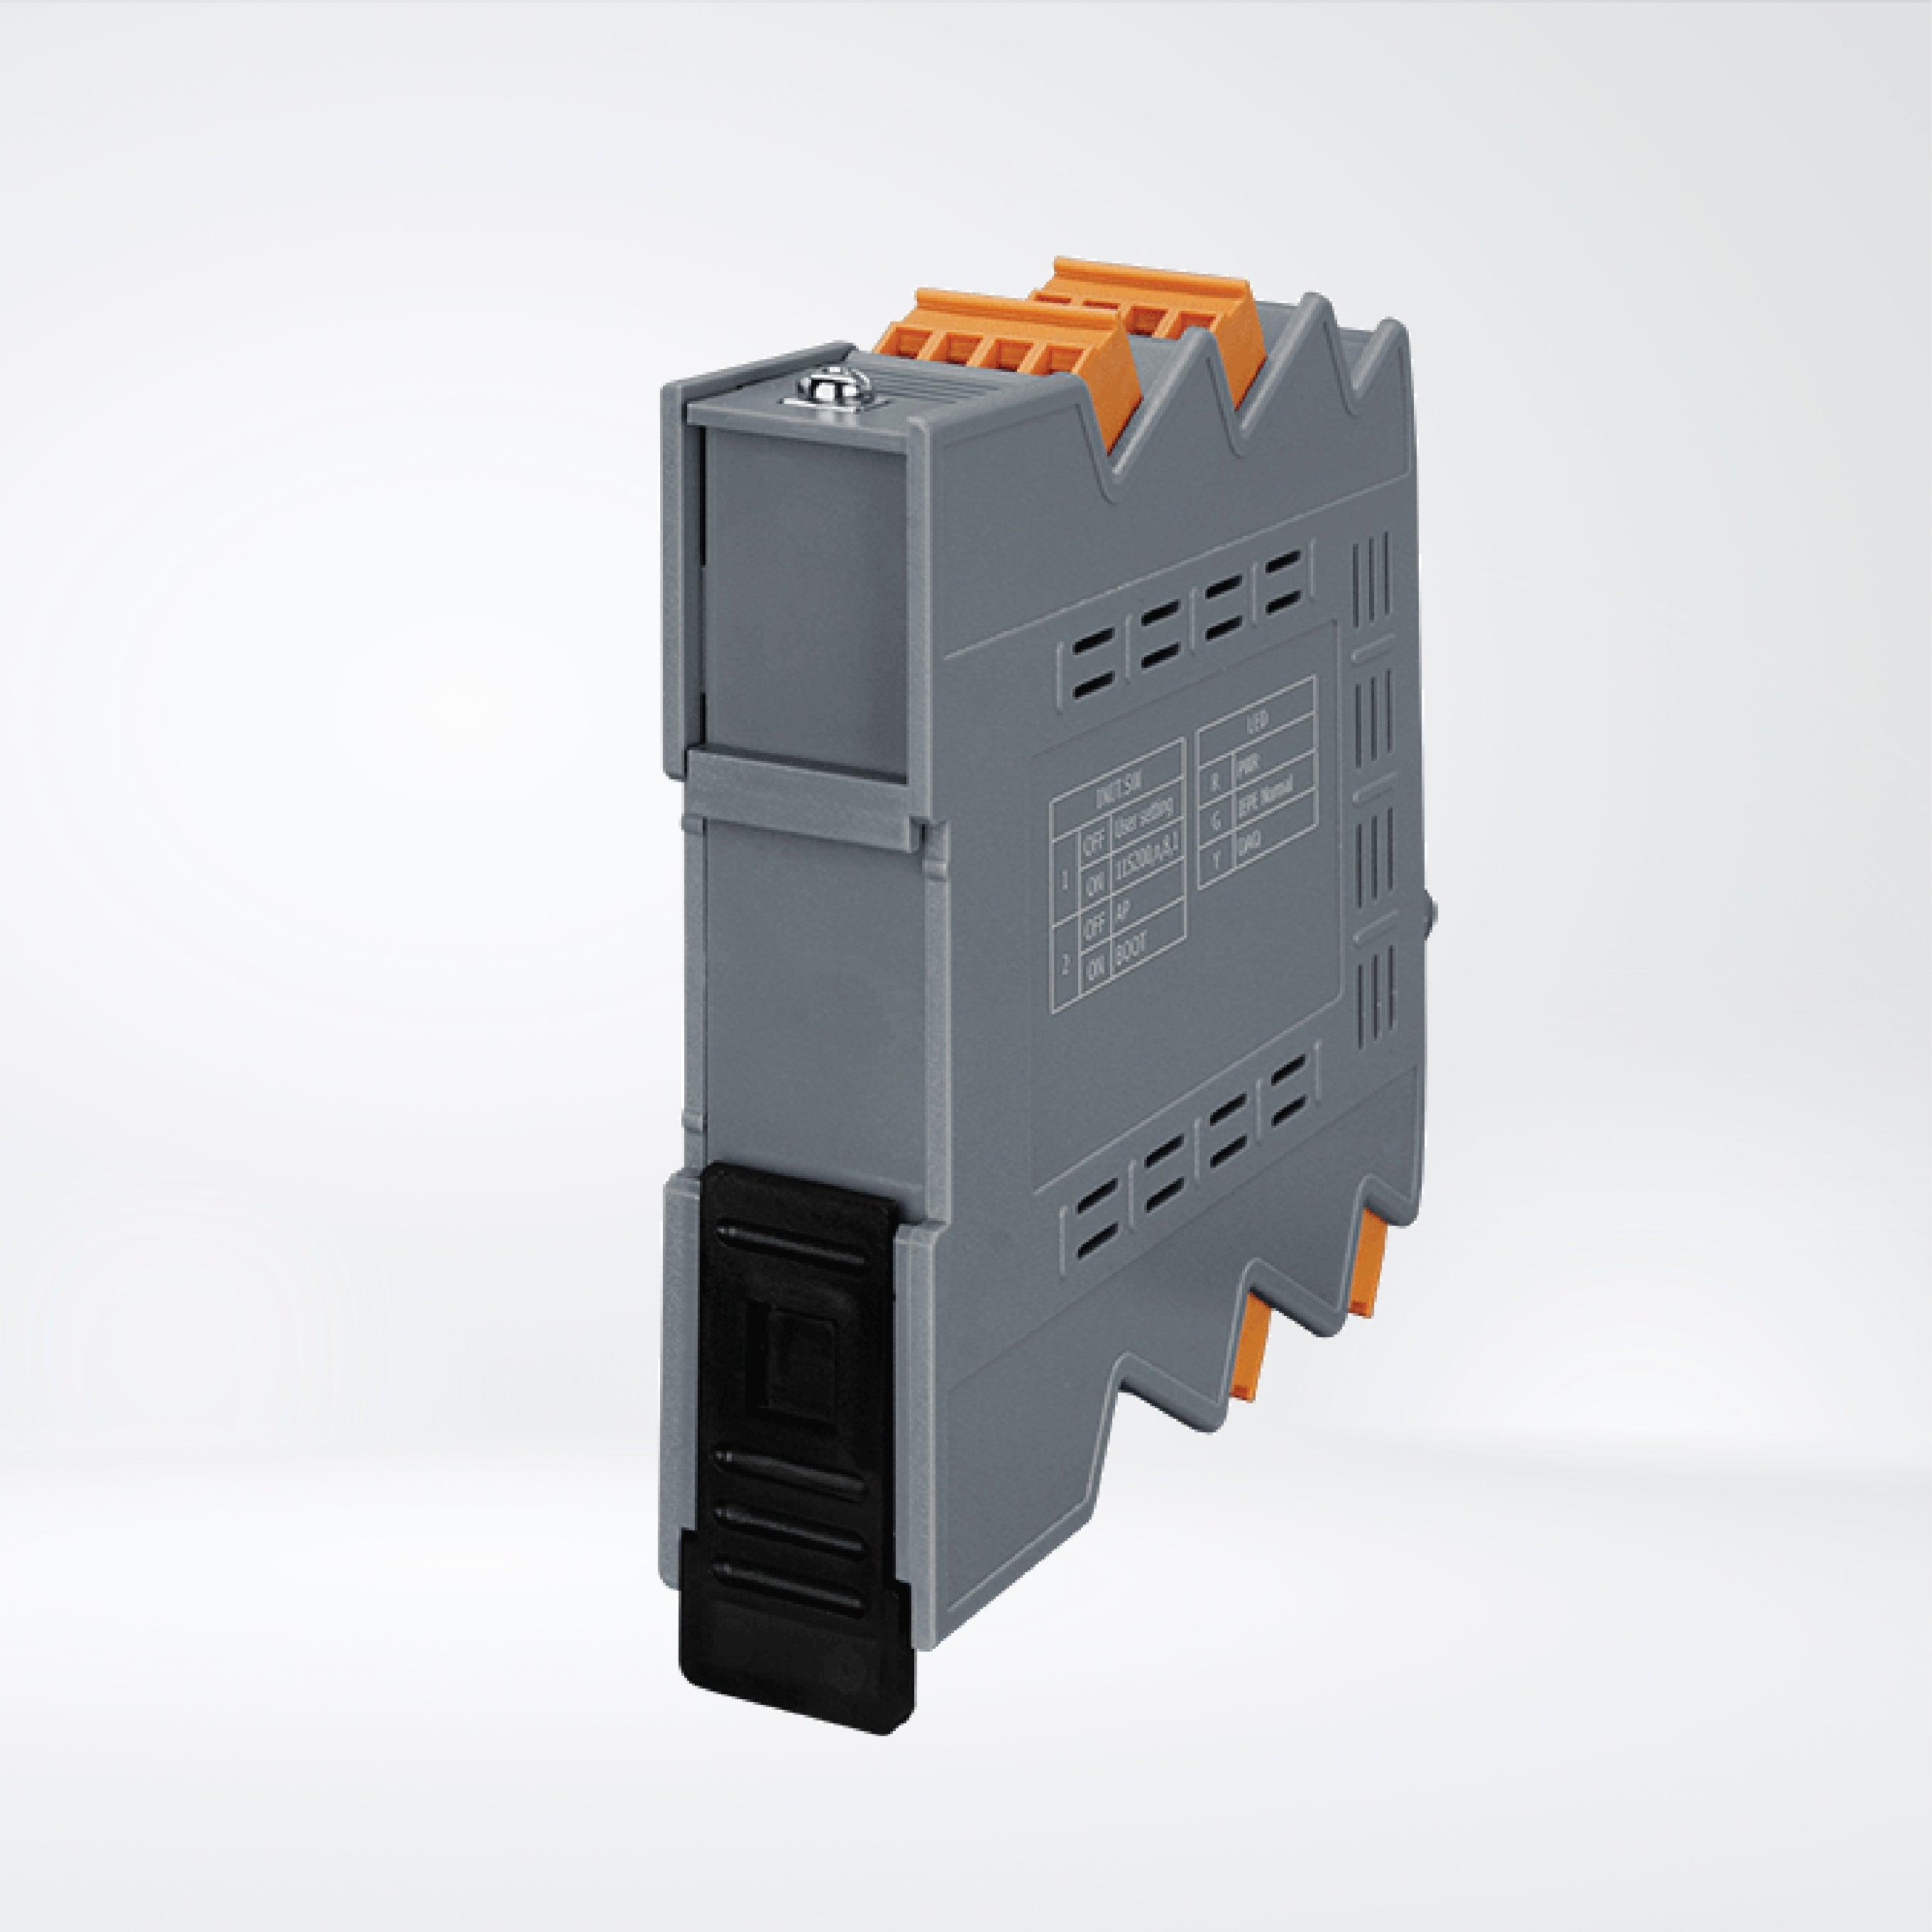 iSN-701X-mA Vibration signal to Current converter - Riverplus